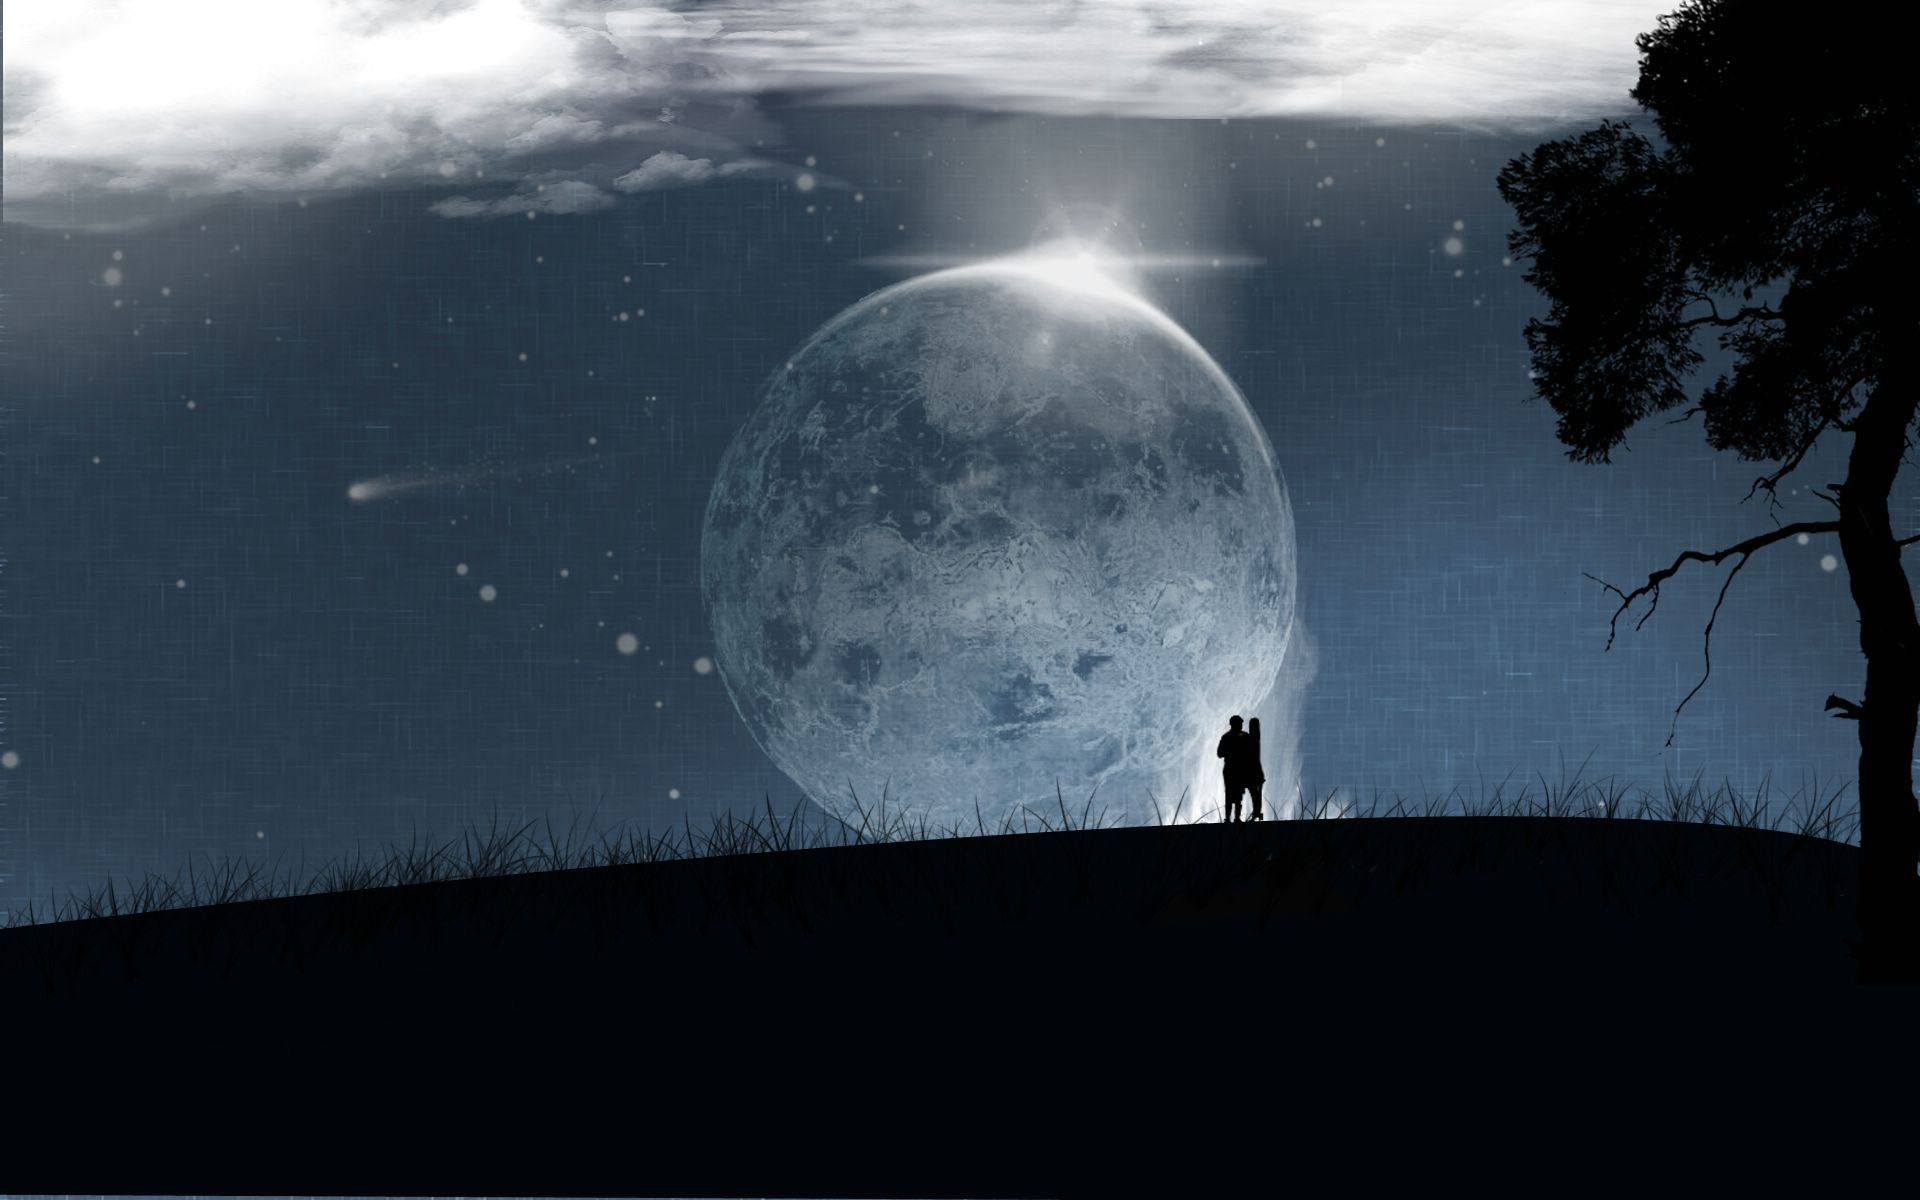 desktop beautiful full moon images dowload free hd 4k background wallpaperss